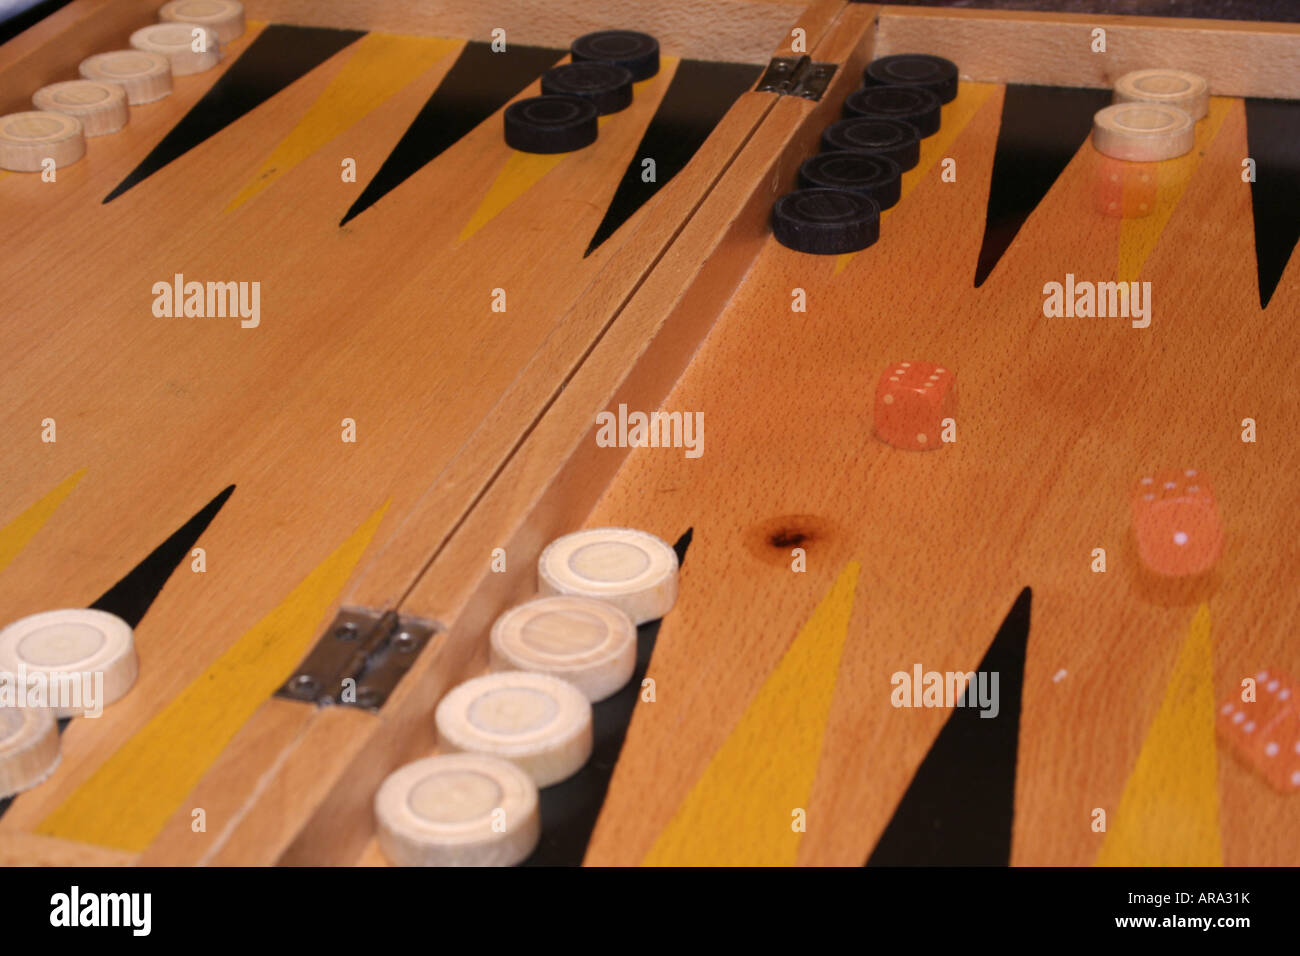 closeup image of a checkers board Stock Photo